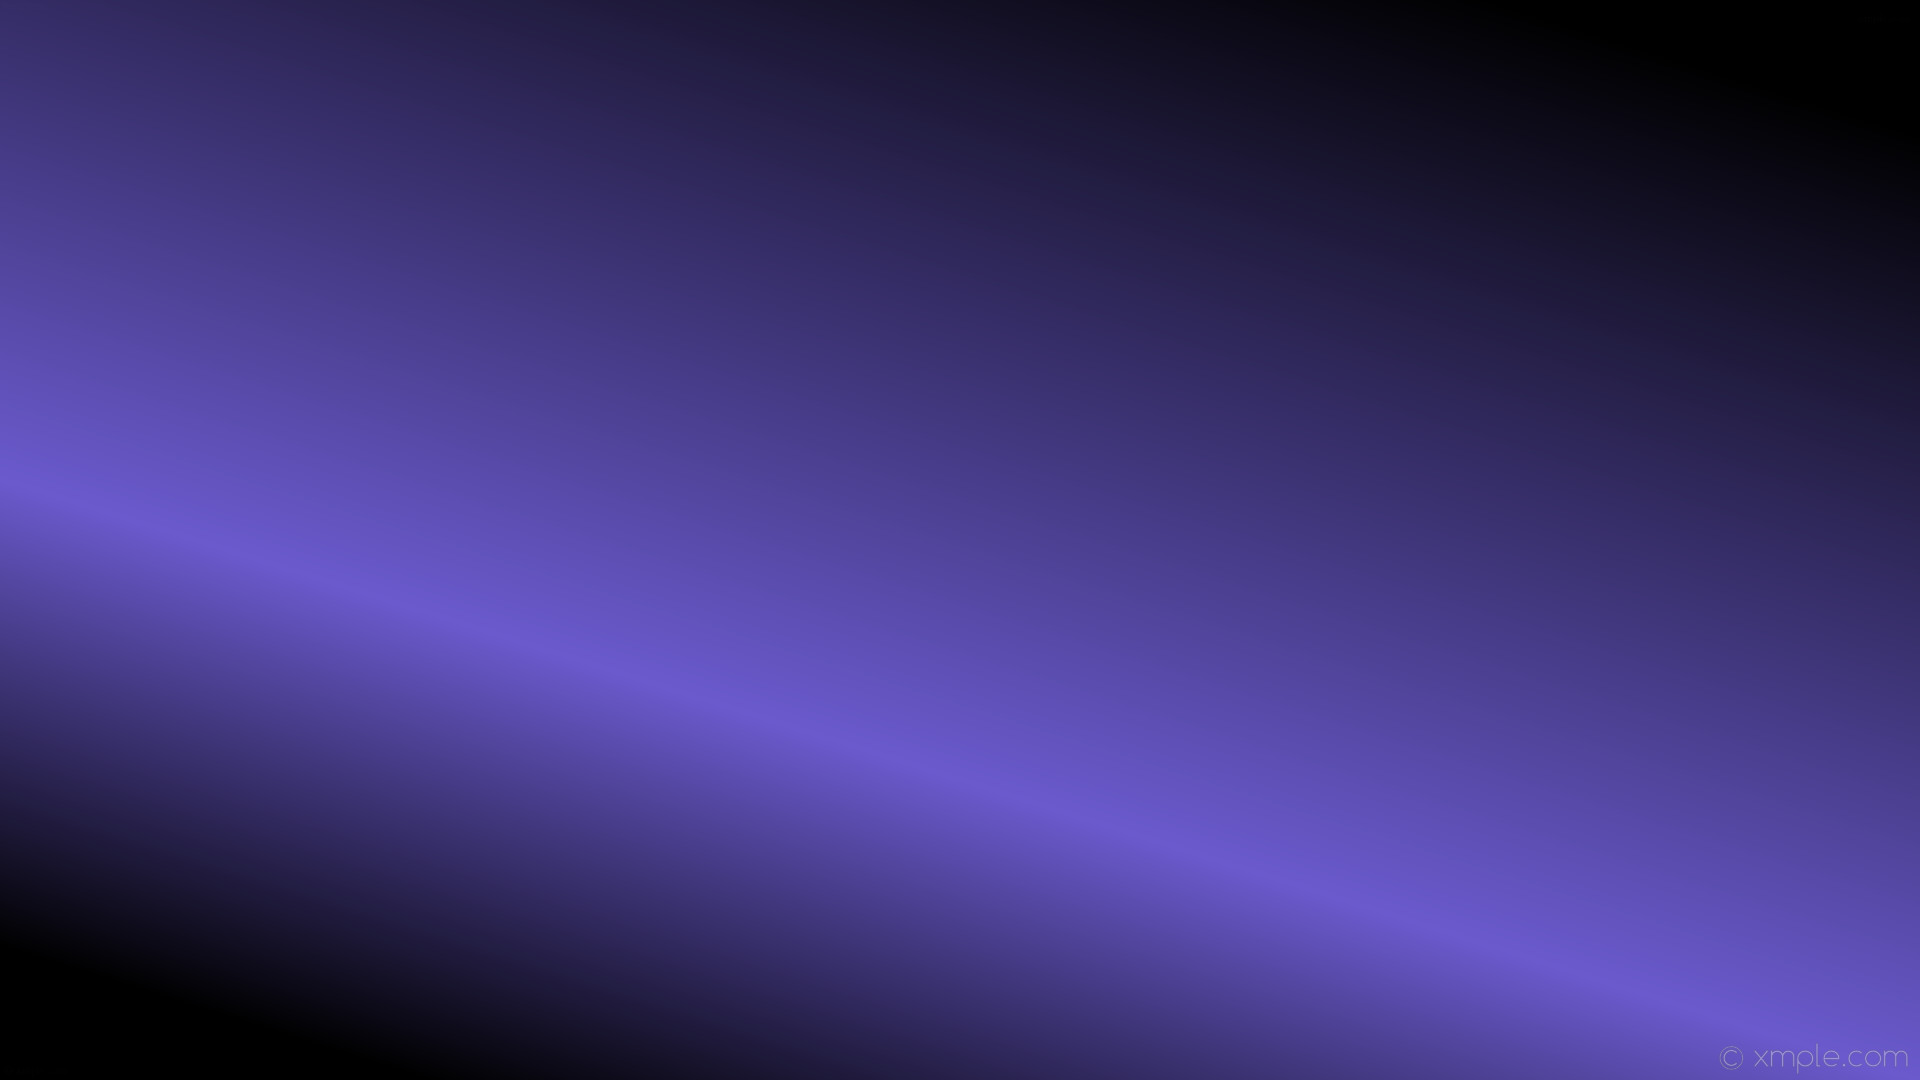 1920x1080 wallpaper highlight purple linear gradient black slate blue #000000 #6a5acd  45Â° 67%